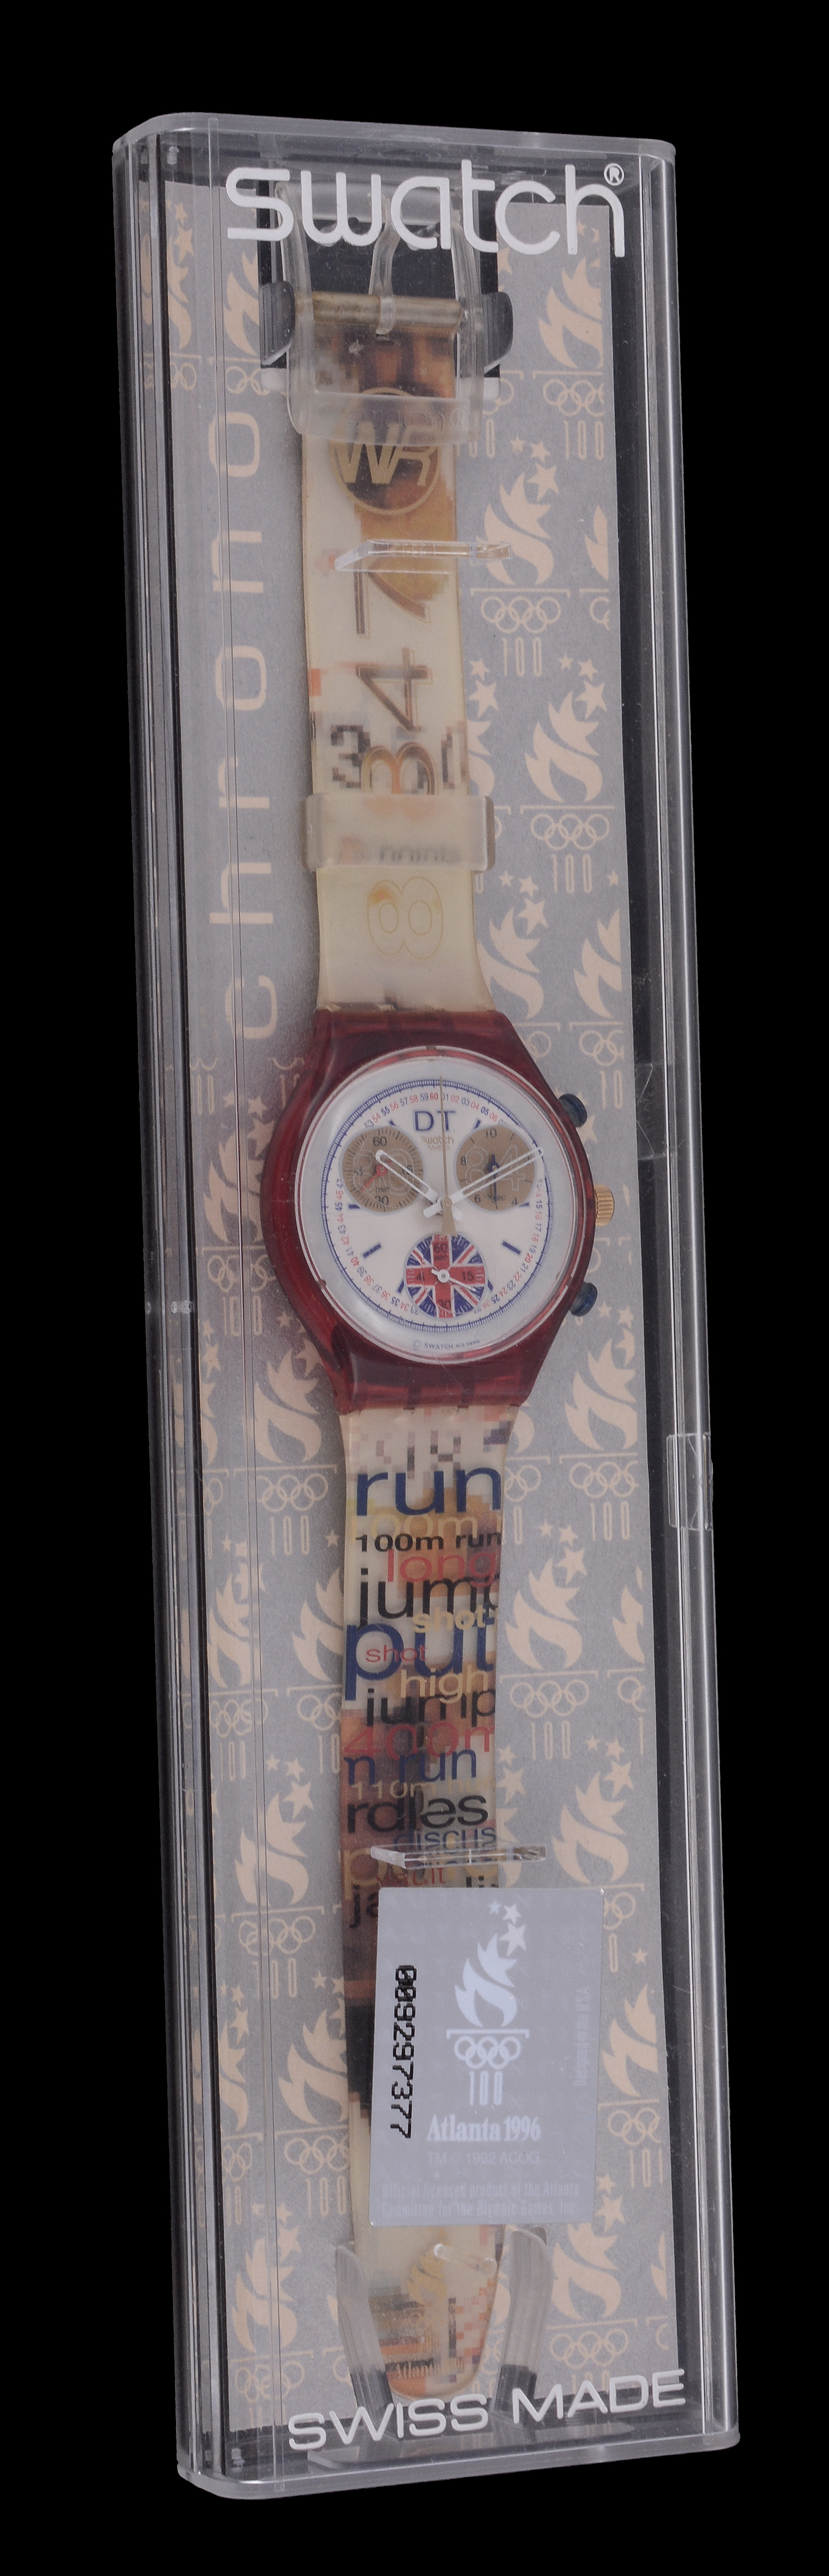 Swatch, Daley Thompson, Atlanta 1996 Olympic Games, a plastic wristwatch, quartz chronograph - Image 2 of 2